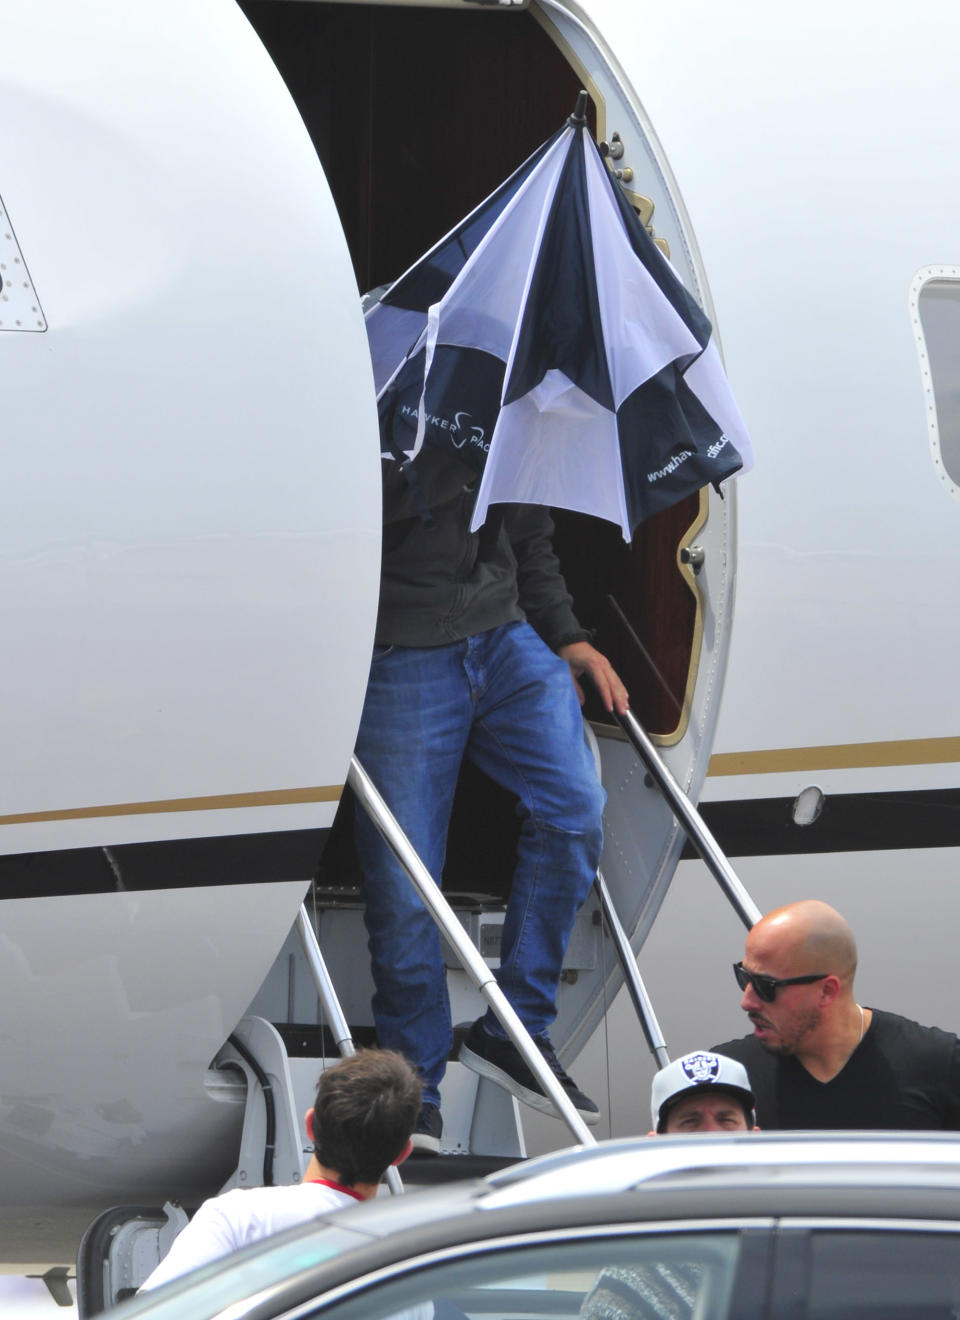 Camera-shy Leonardo DiCaprio steps off a private plane with a giant umbrella on his head. (Photo: Hot Shots Worldwide/Splash)